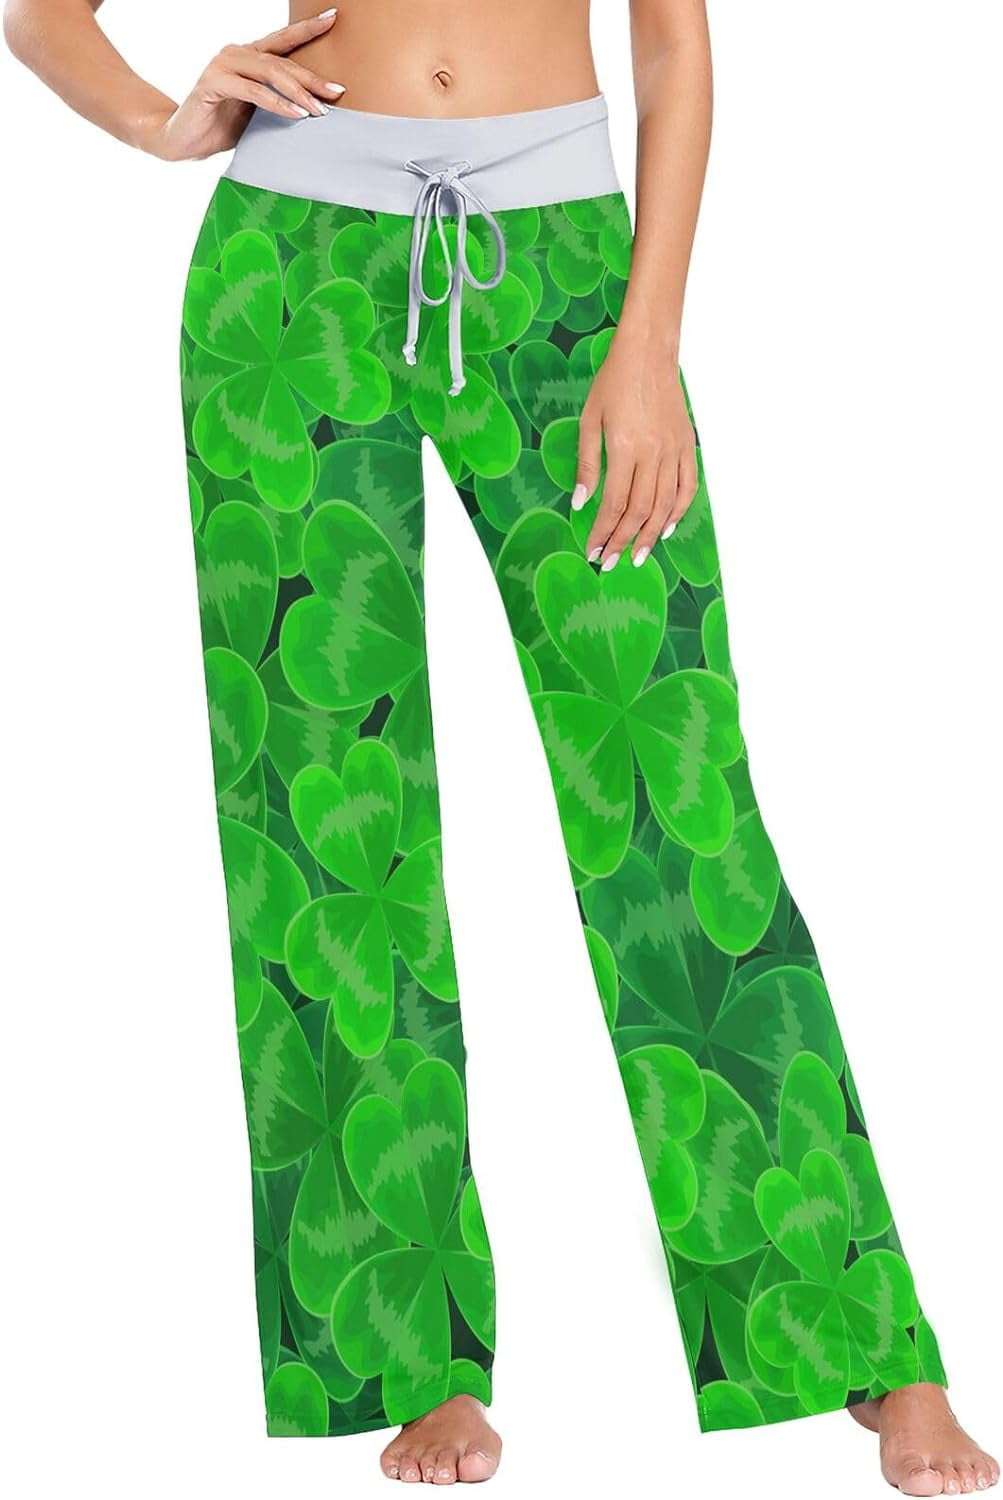 Women's Pajama Pants Plant Clover Comfy Stretch Sleepwear Essentials womens  Lightweight Lounge Terry Pajama Pant, Medium 